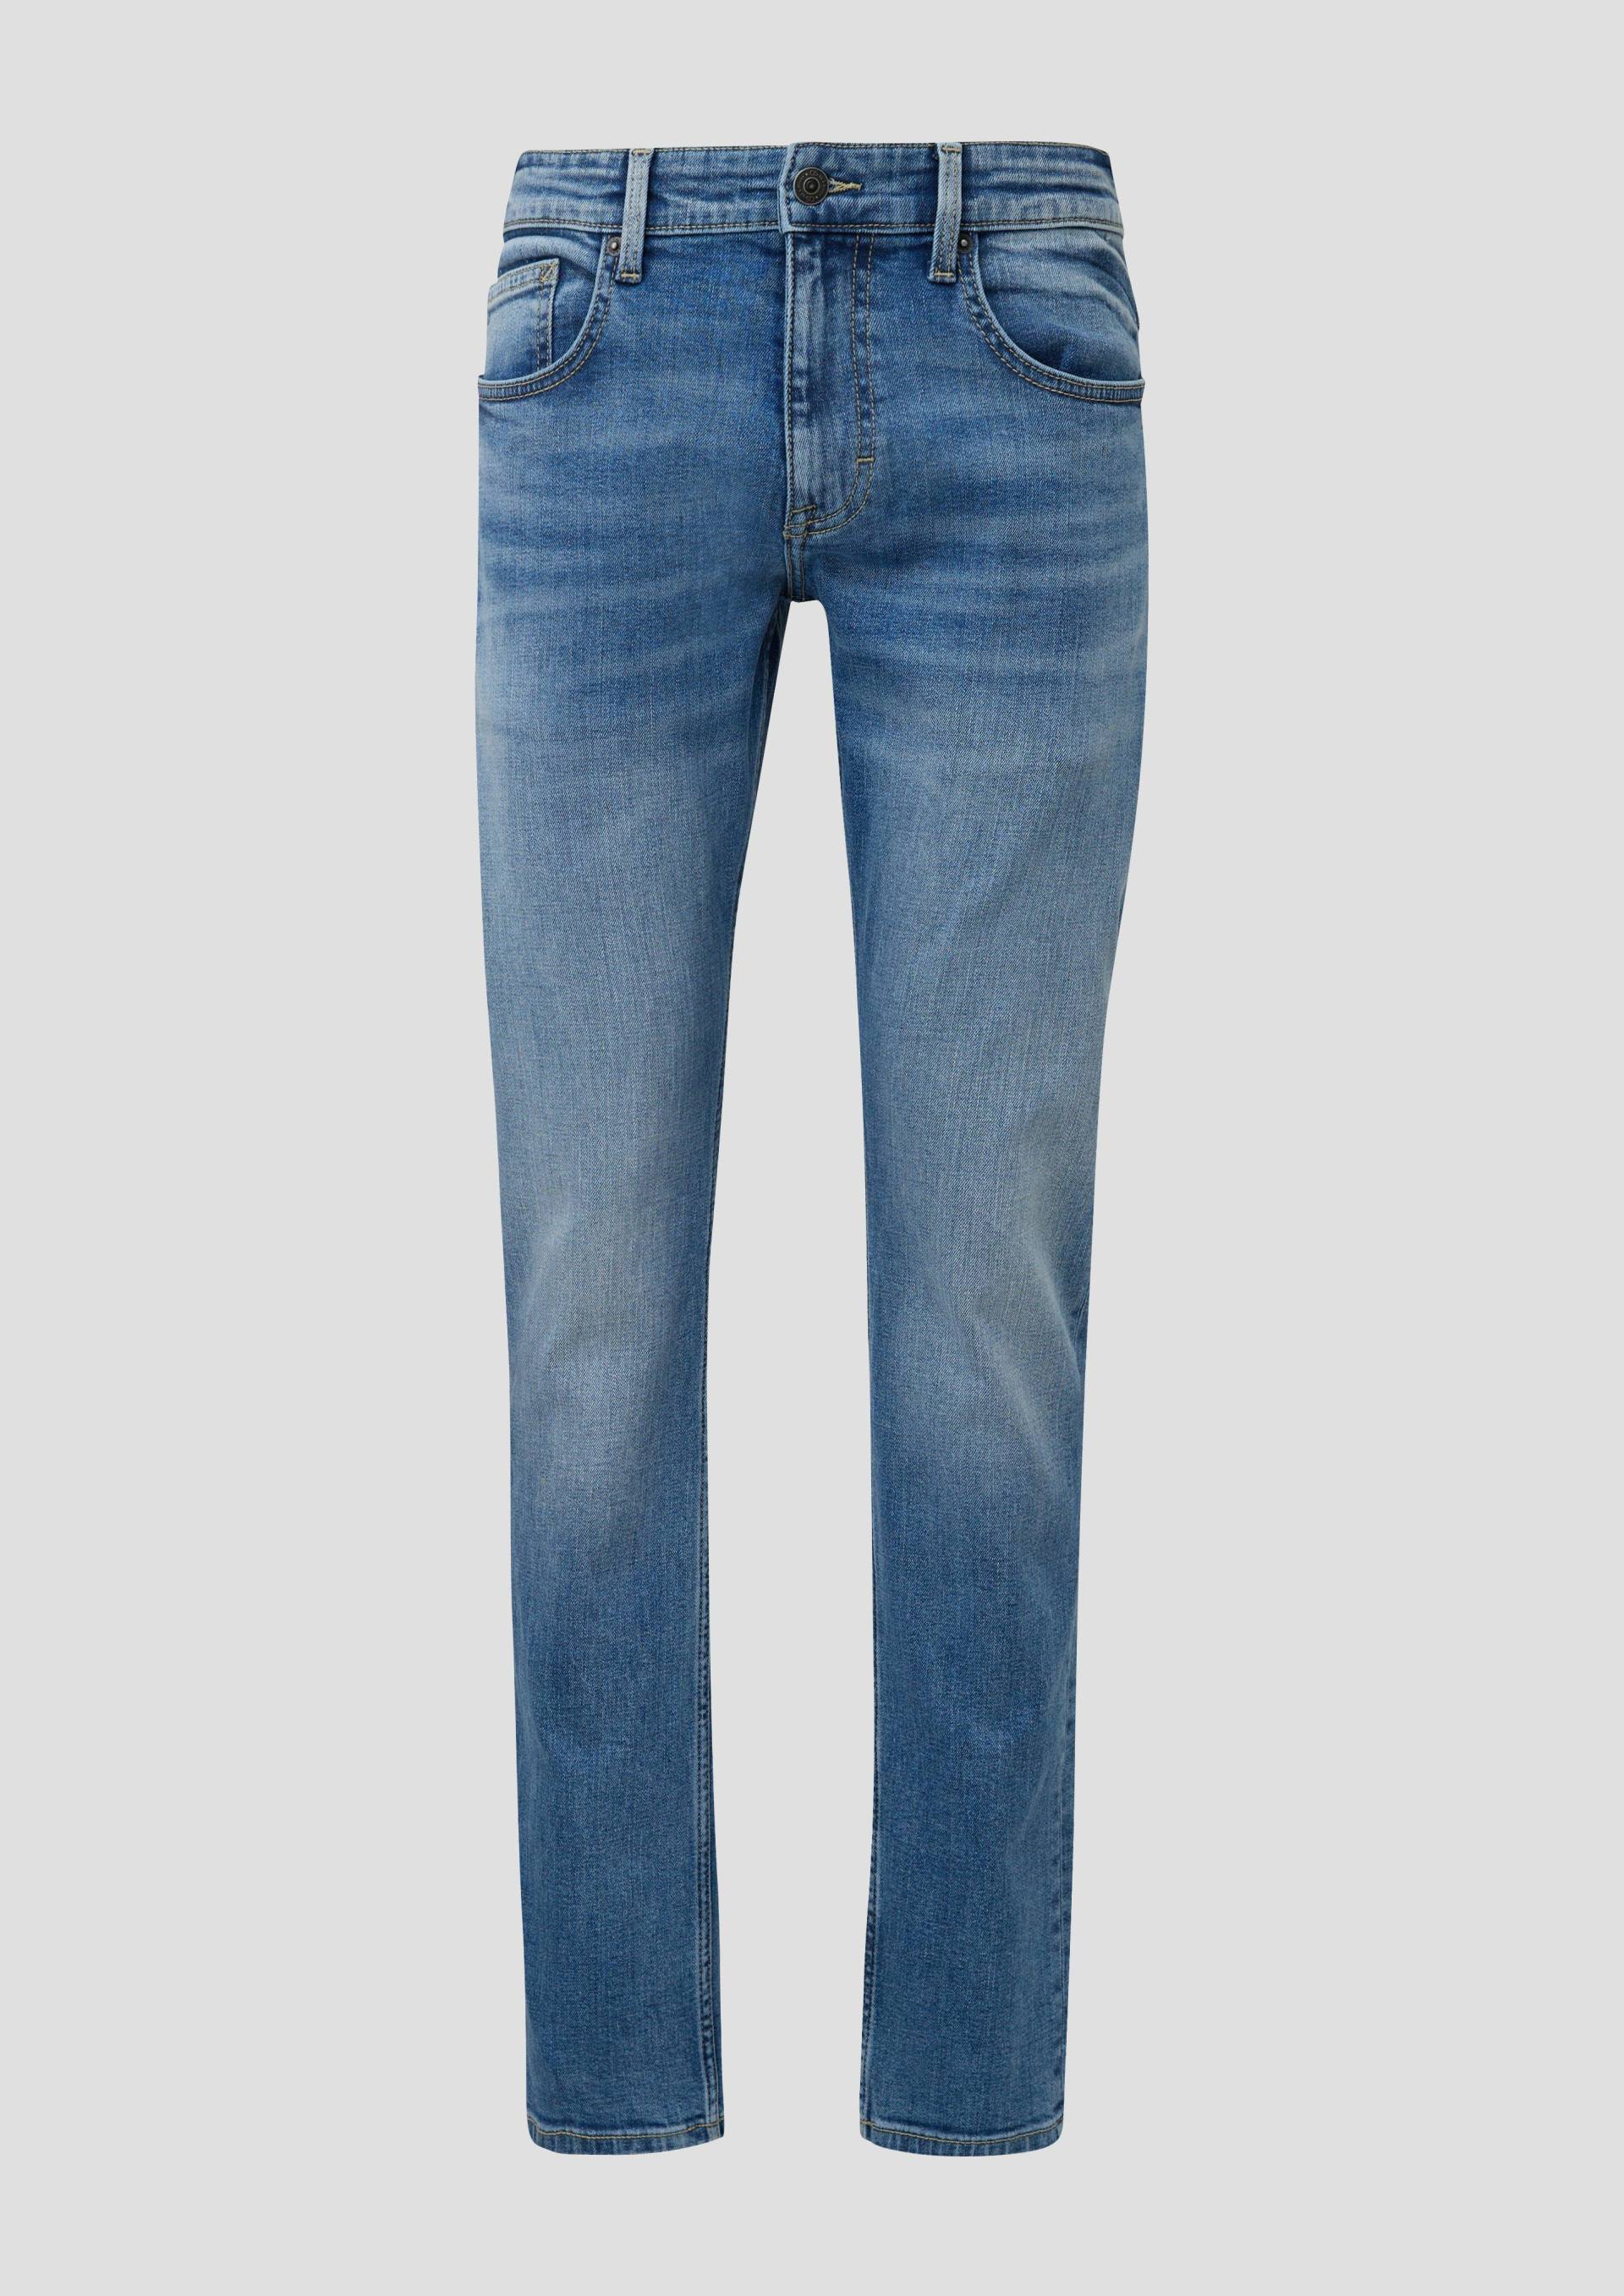 QS - Jeans Rick / Slim Fit / Mid Rise / Slim Leg, Herren, blau von QS